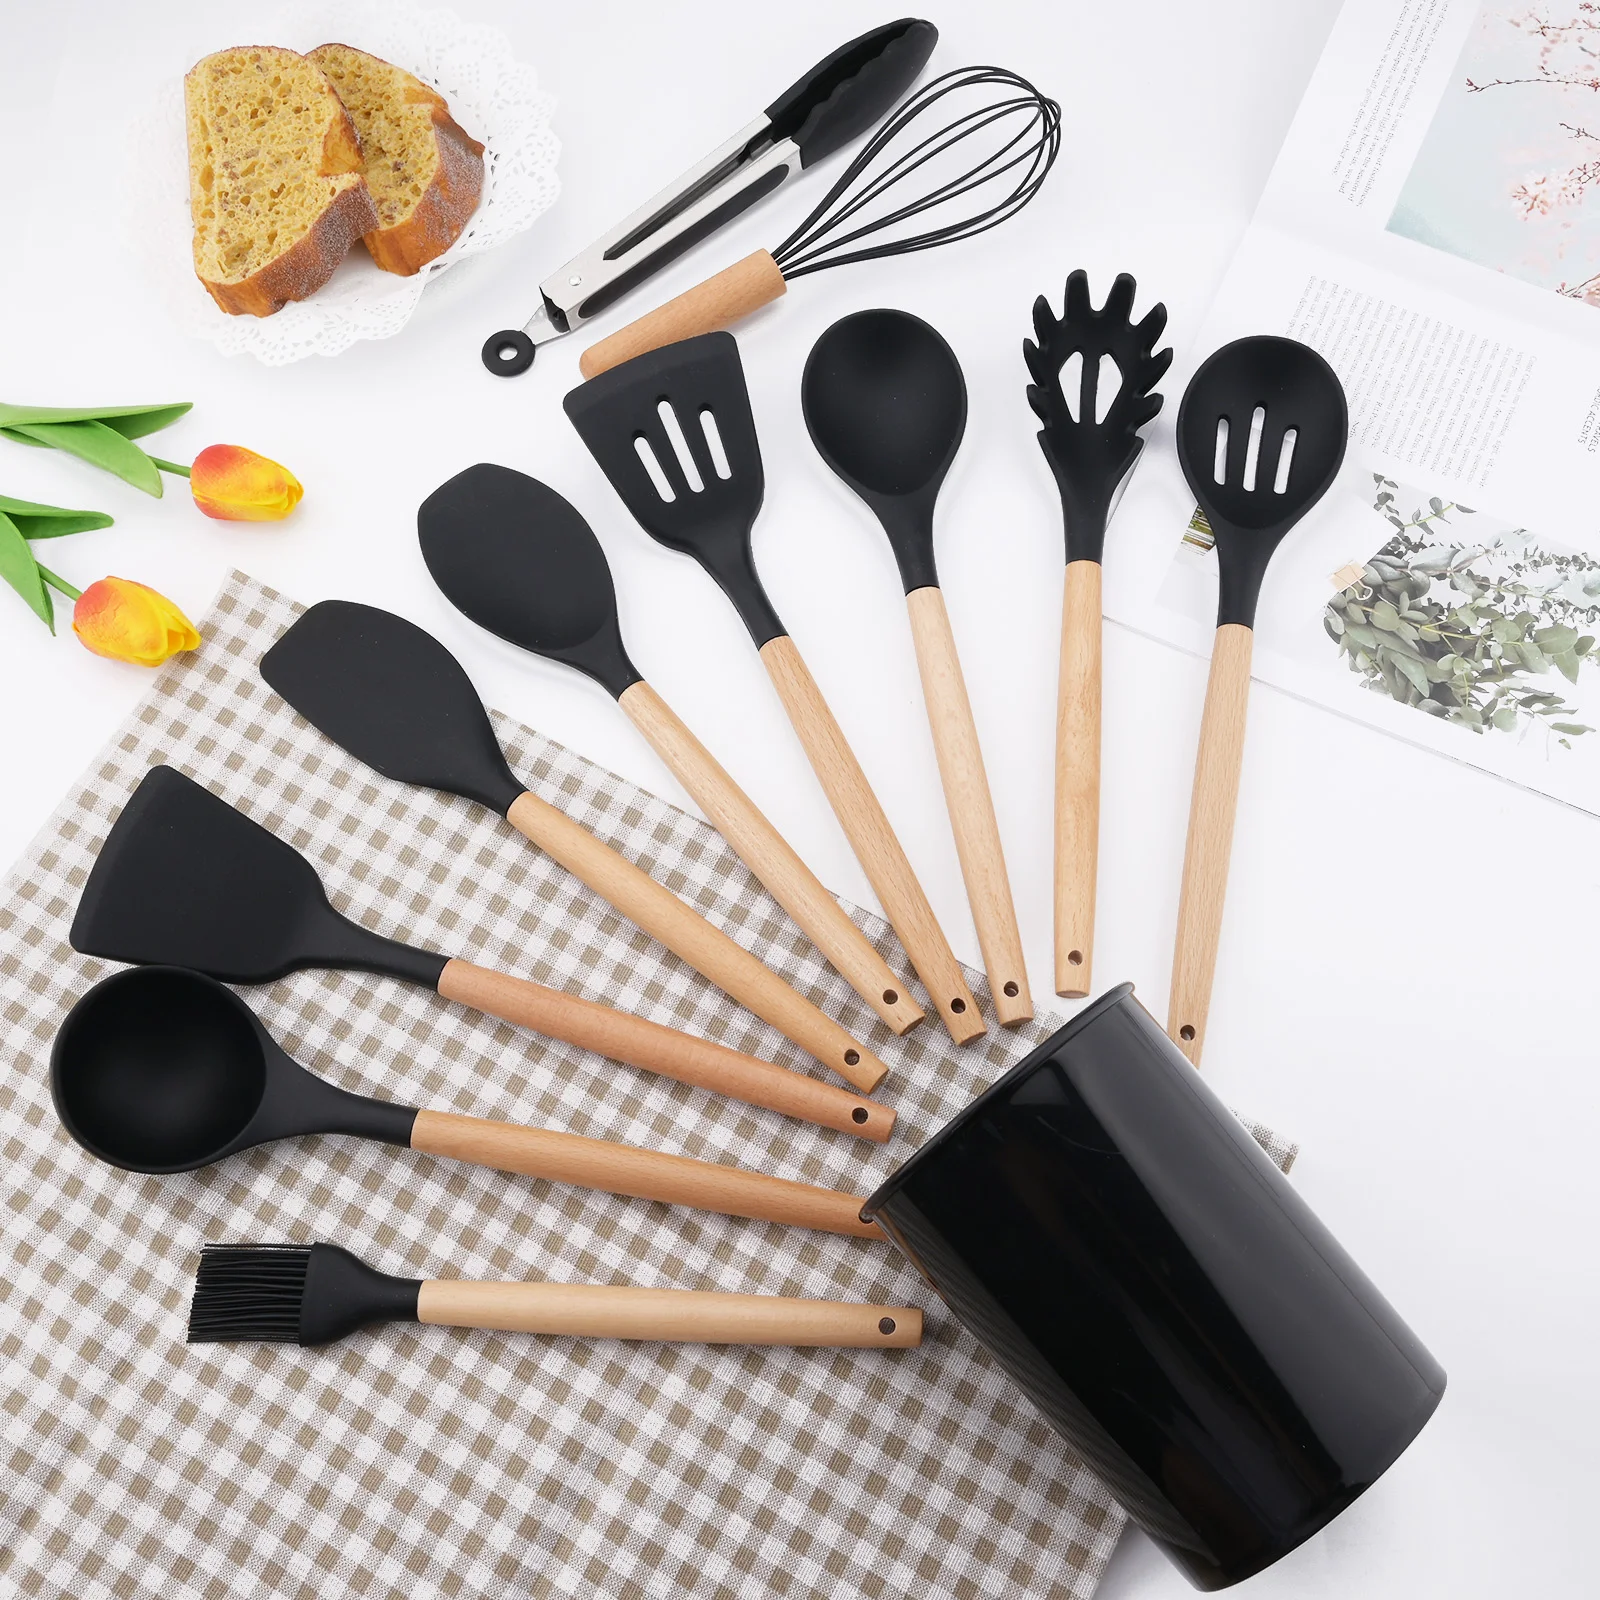 https://ae01.alicdn.com/kf/S1fe60ecea78b446783cdf68497401e292/12Pcs-Silicone-Kitchen-Utensils-Set-Non-Stick-Kitchenware-Cooking-Set-with-Holder-Wooden-Handle-Spatula-Spoon.jpg